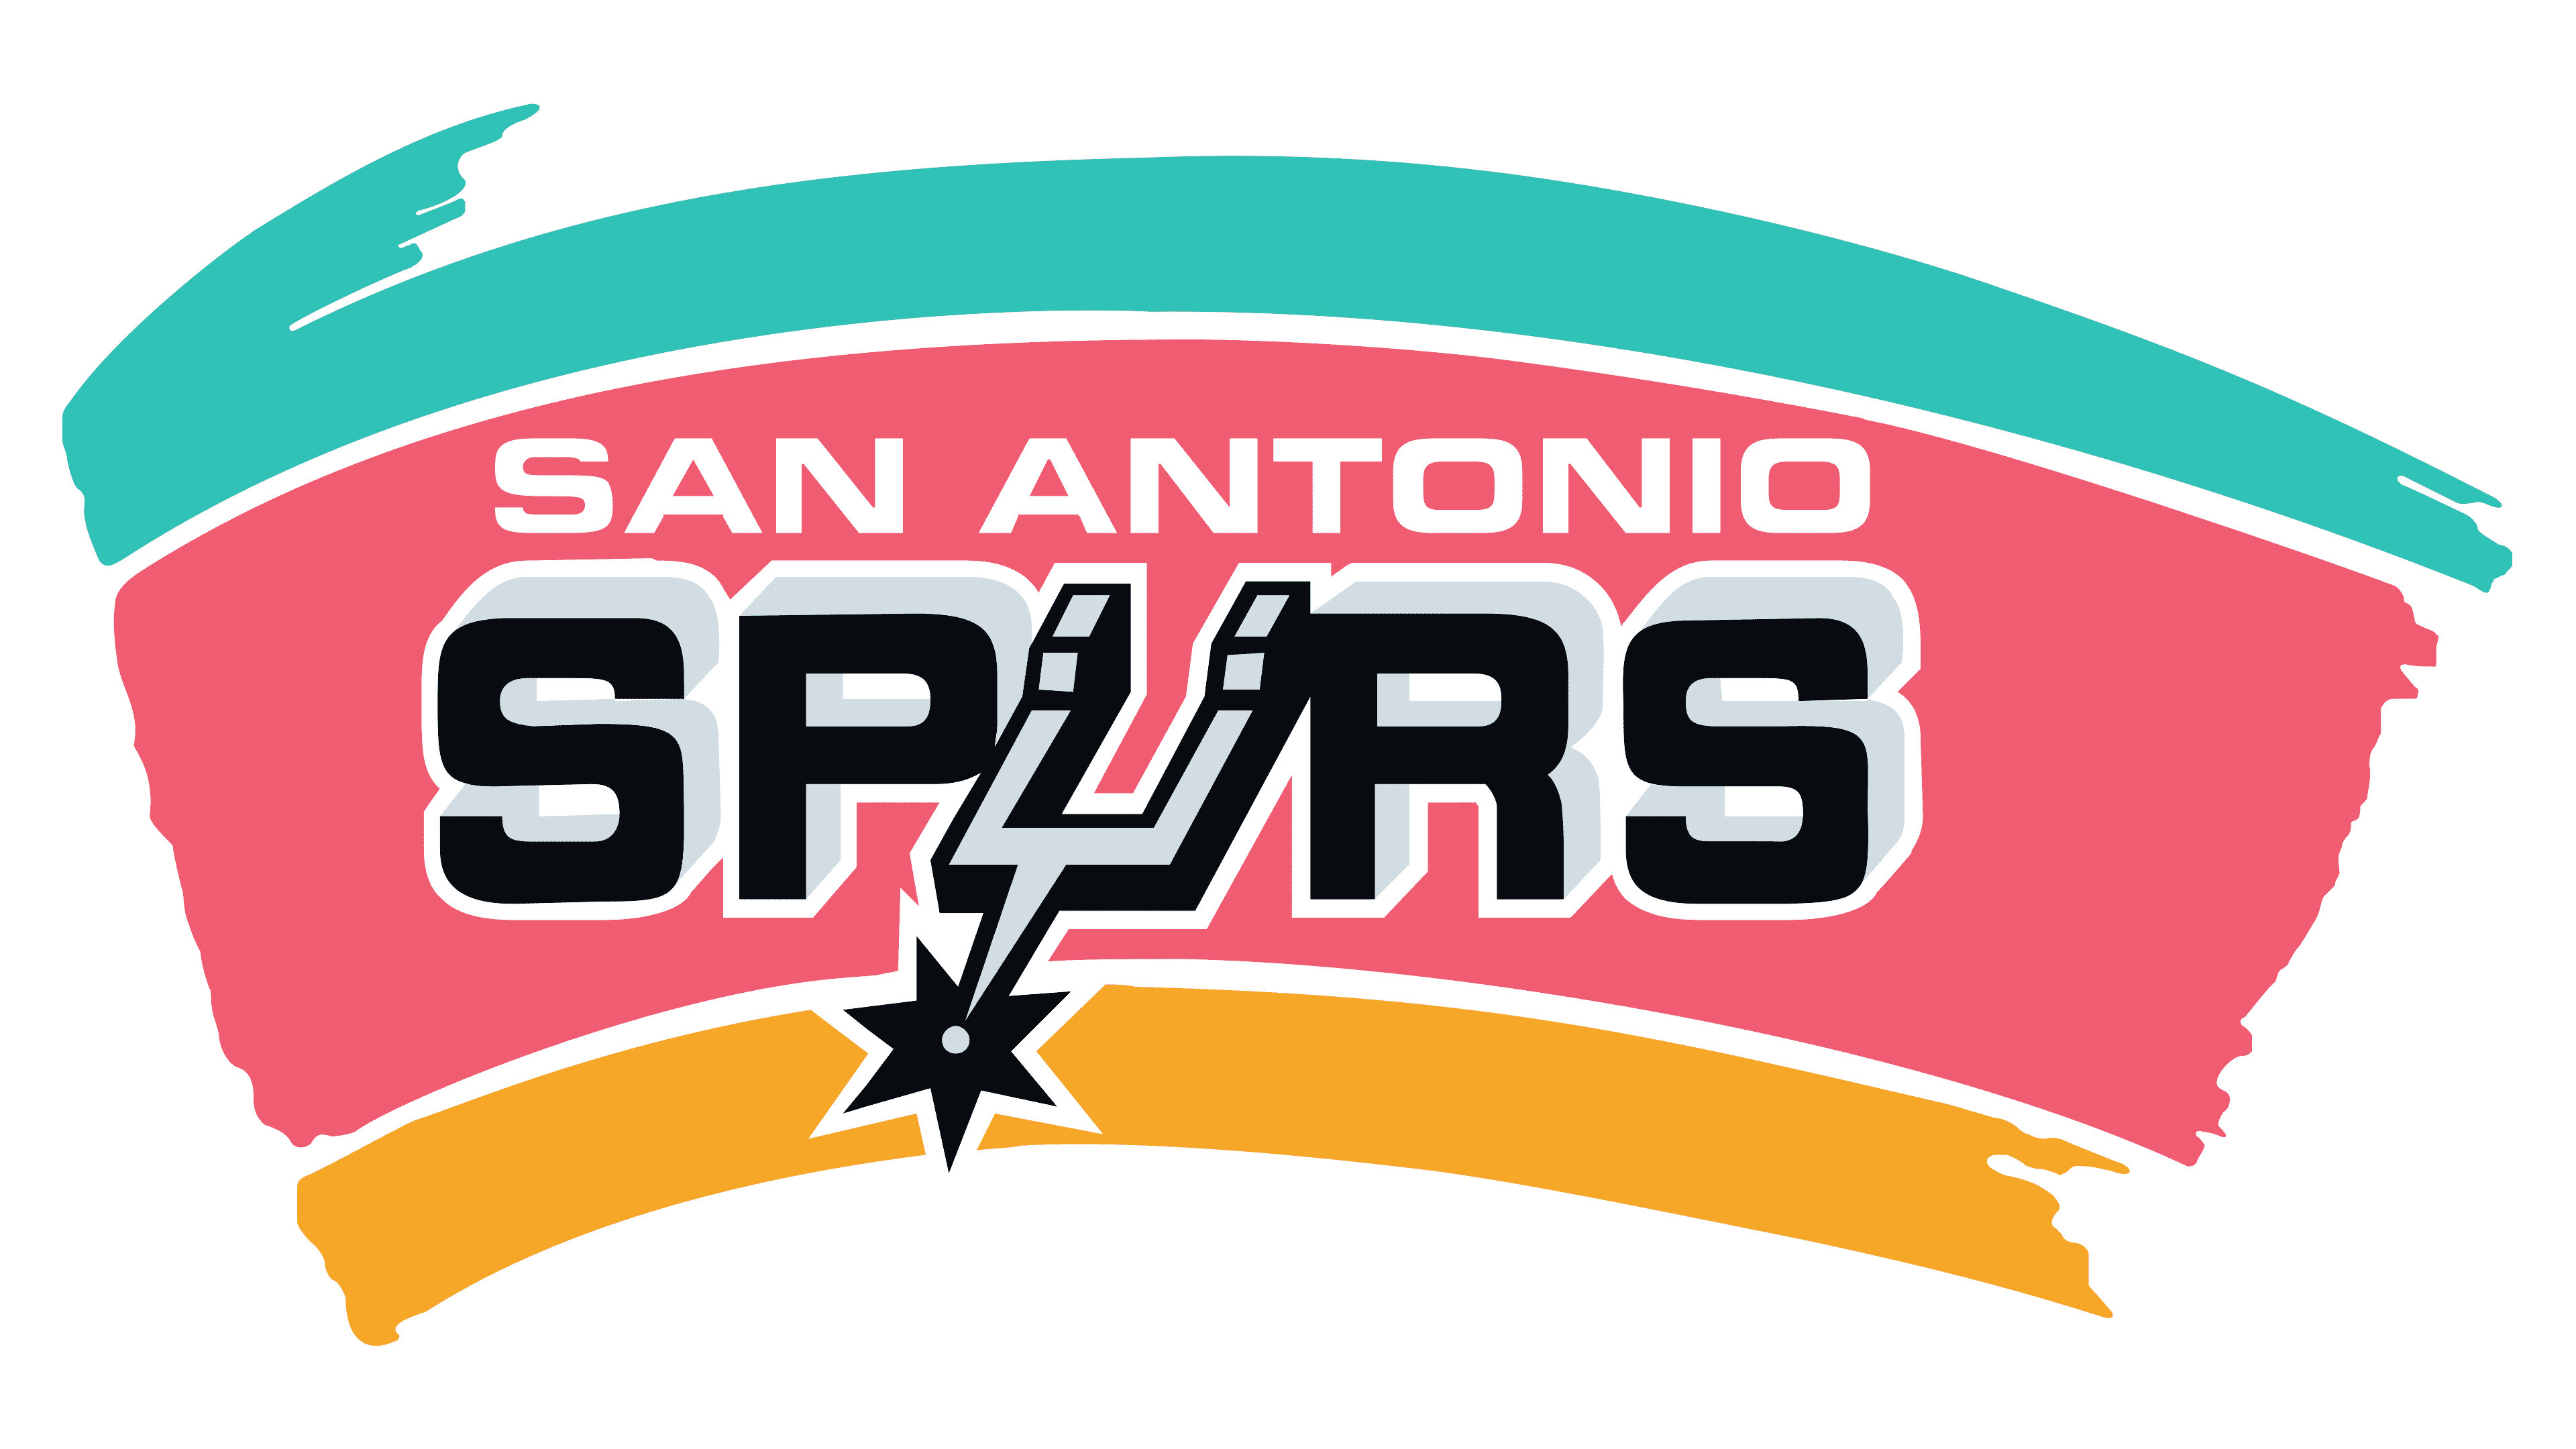 2011-01-23  San antonio spurs, Spurs, ? logo